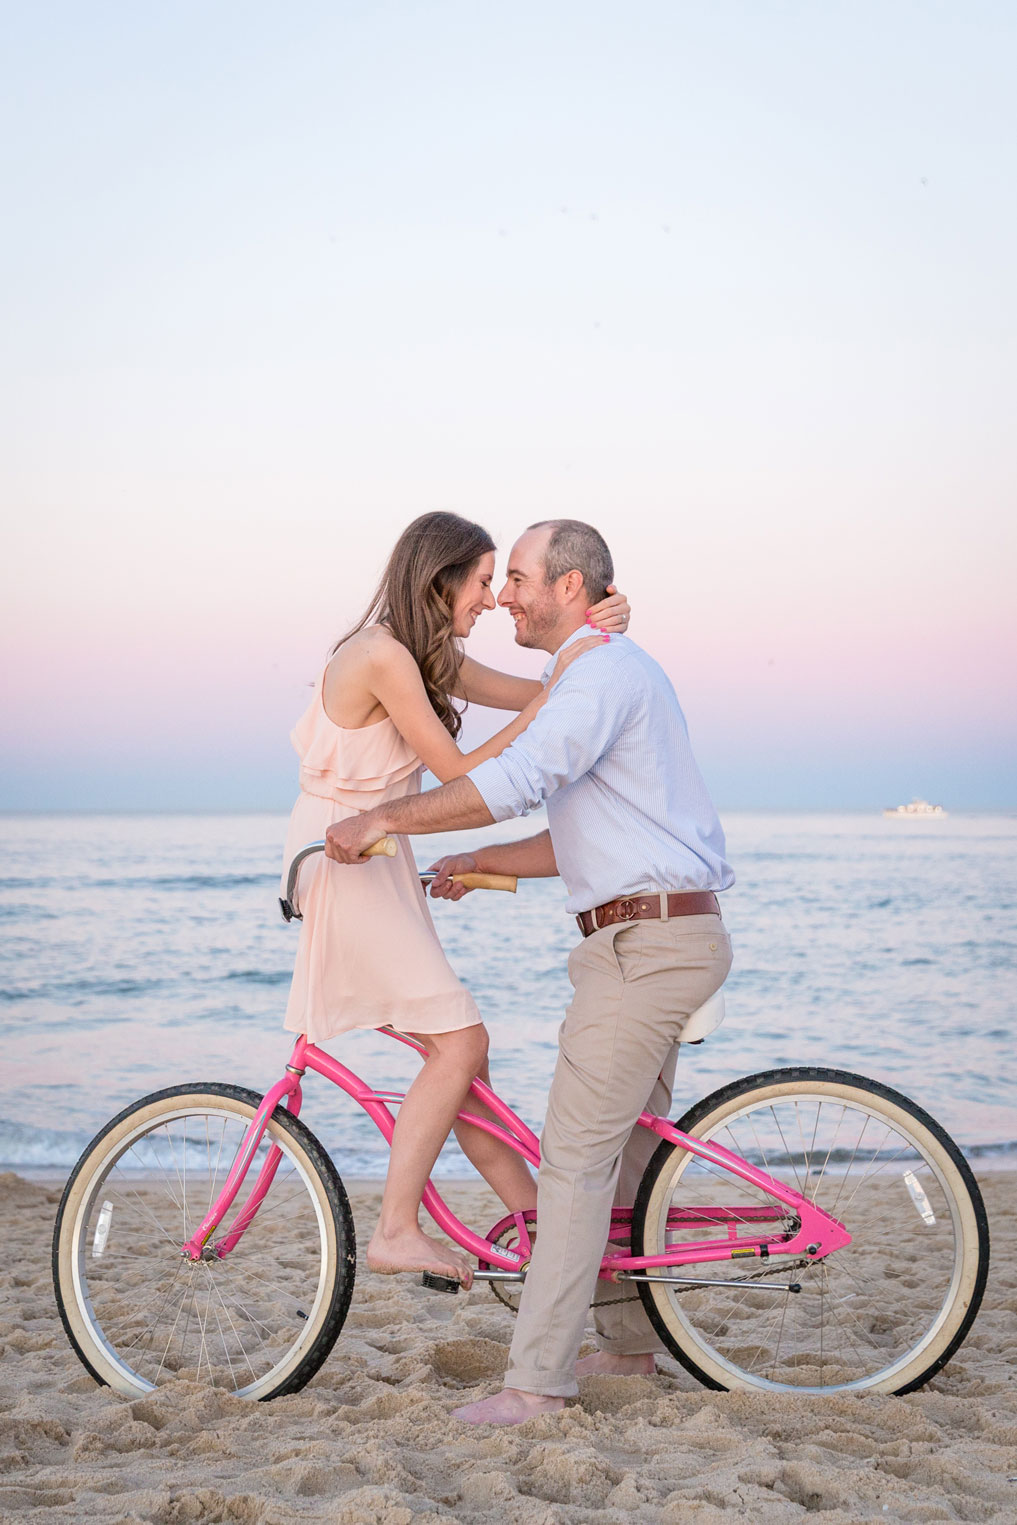 cuddling on a pink beach bike